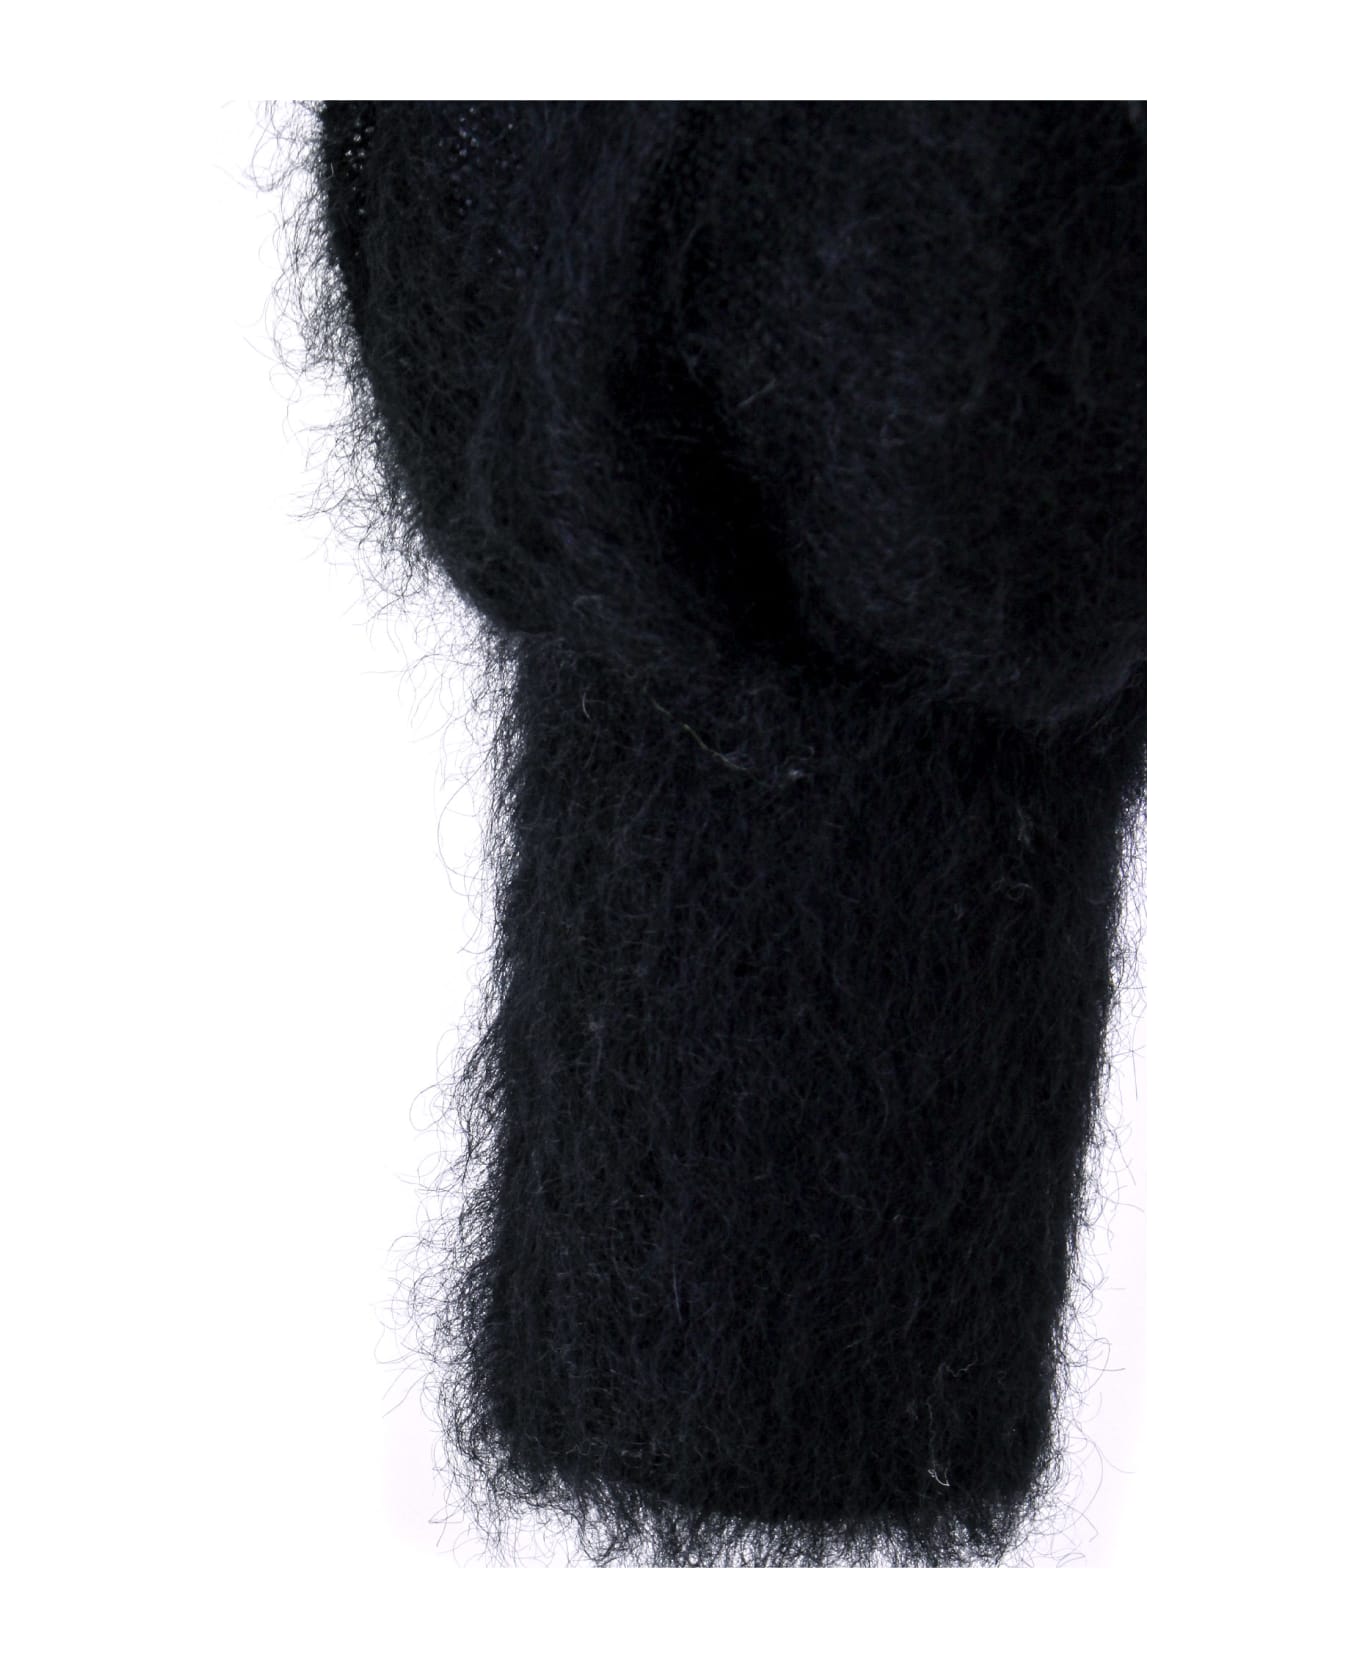 Alberta Ferretti Sweater - Black ニットウェア